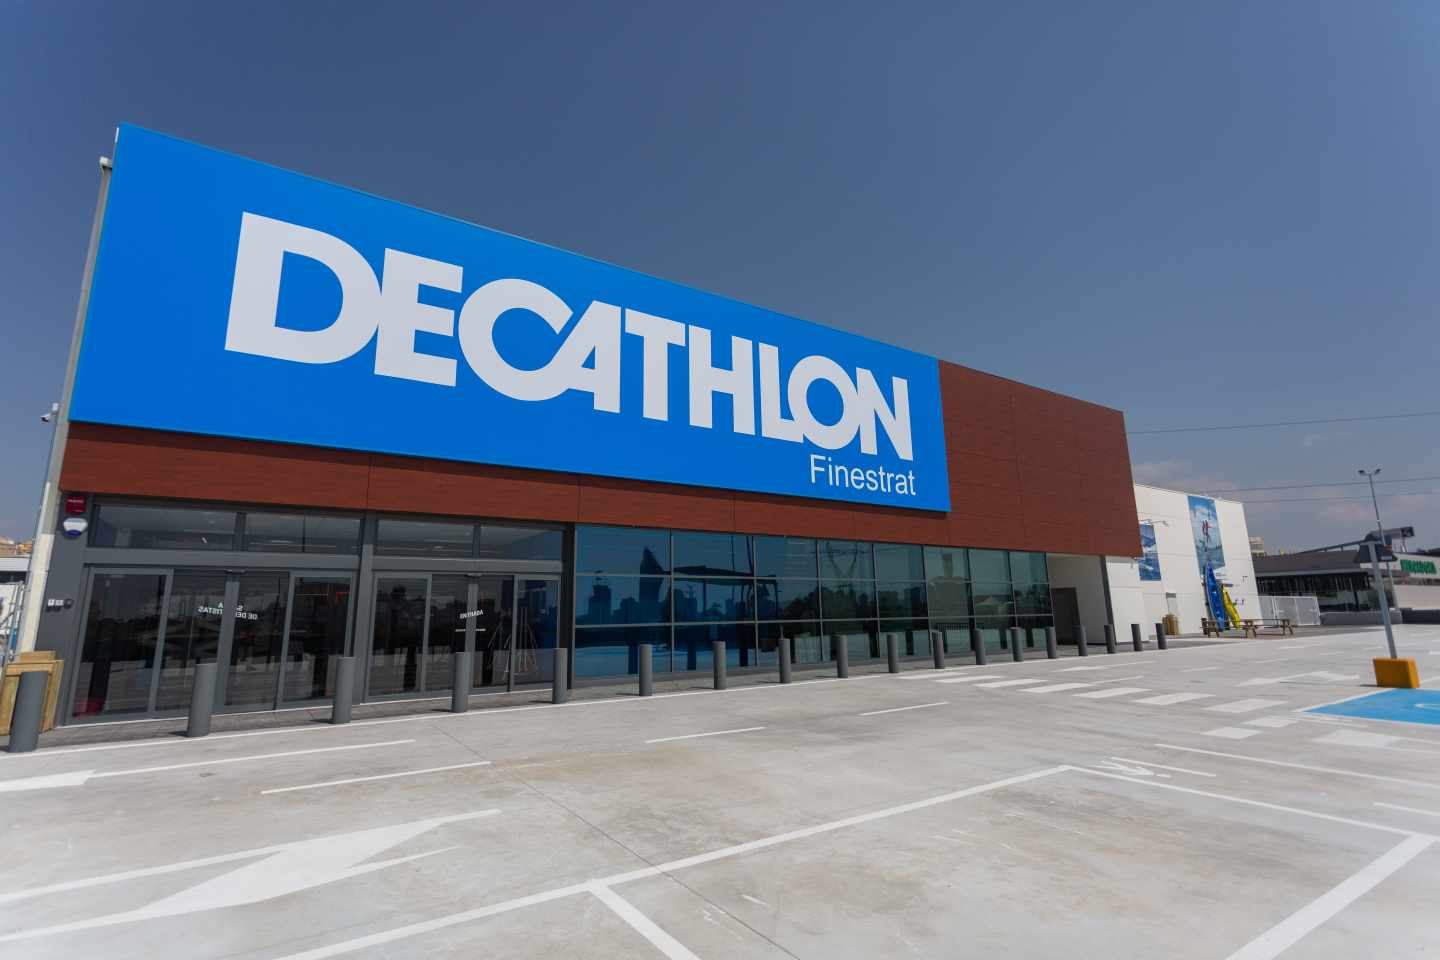 Decathlon hará entregas a domicilio en menos de dos horas en toda España.